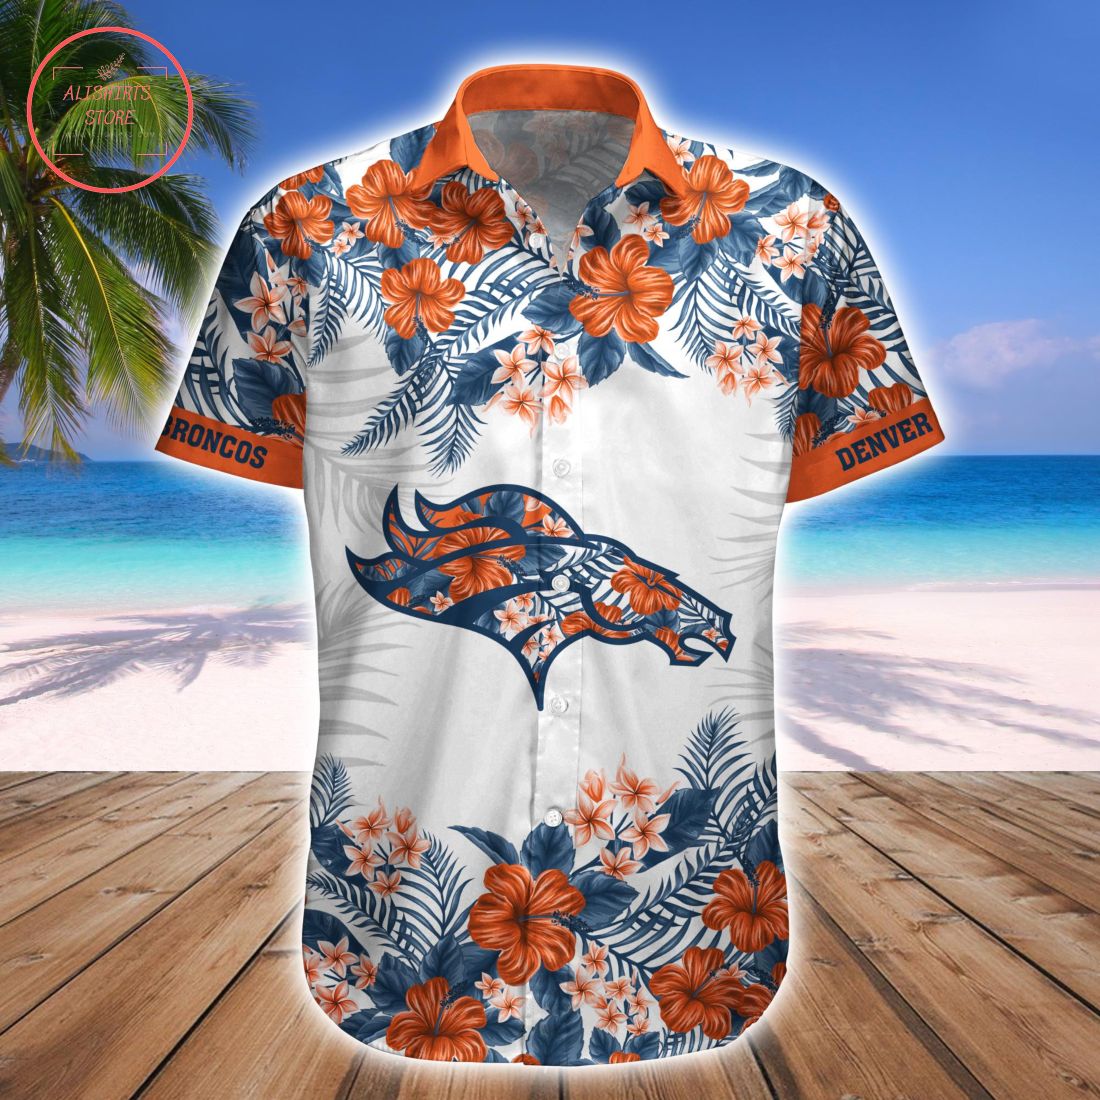 Denver Broncos Combo Hawaiian Shirt and Shorts